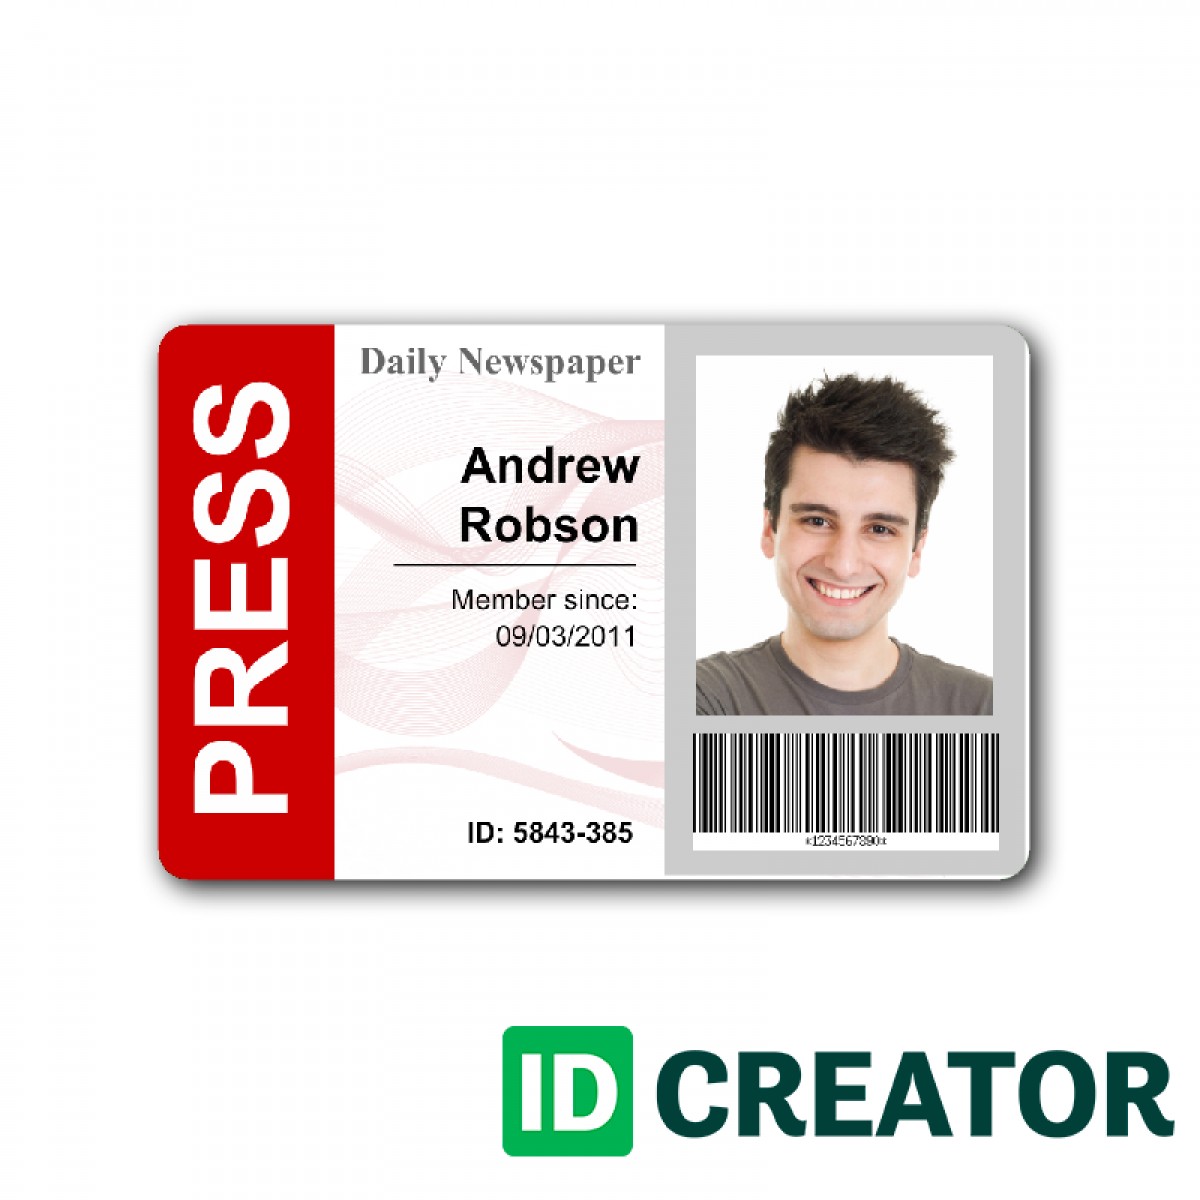 Press Pass Custom Credentials Made Same Day By IDCreator Com Document Passes Template